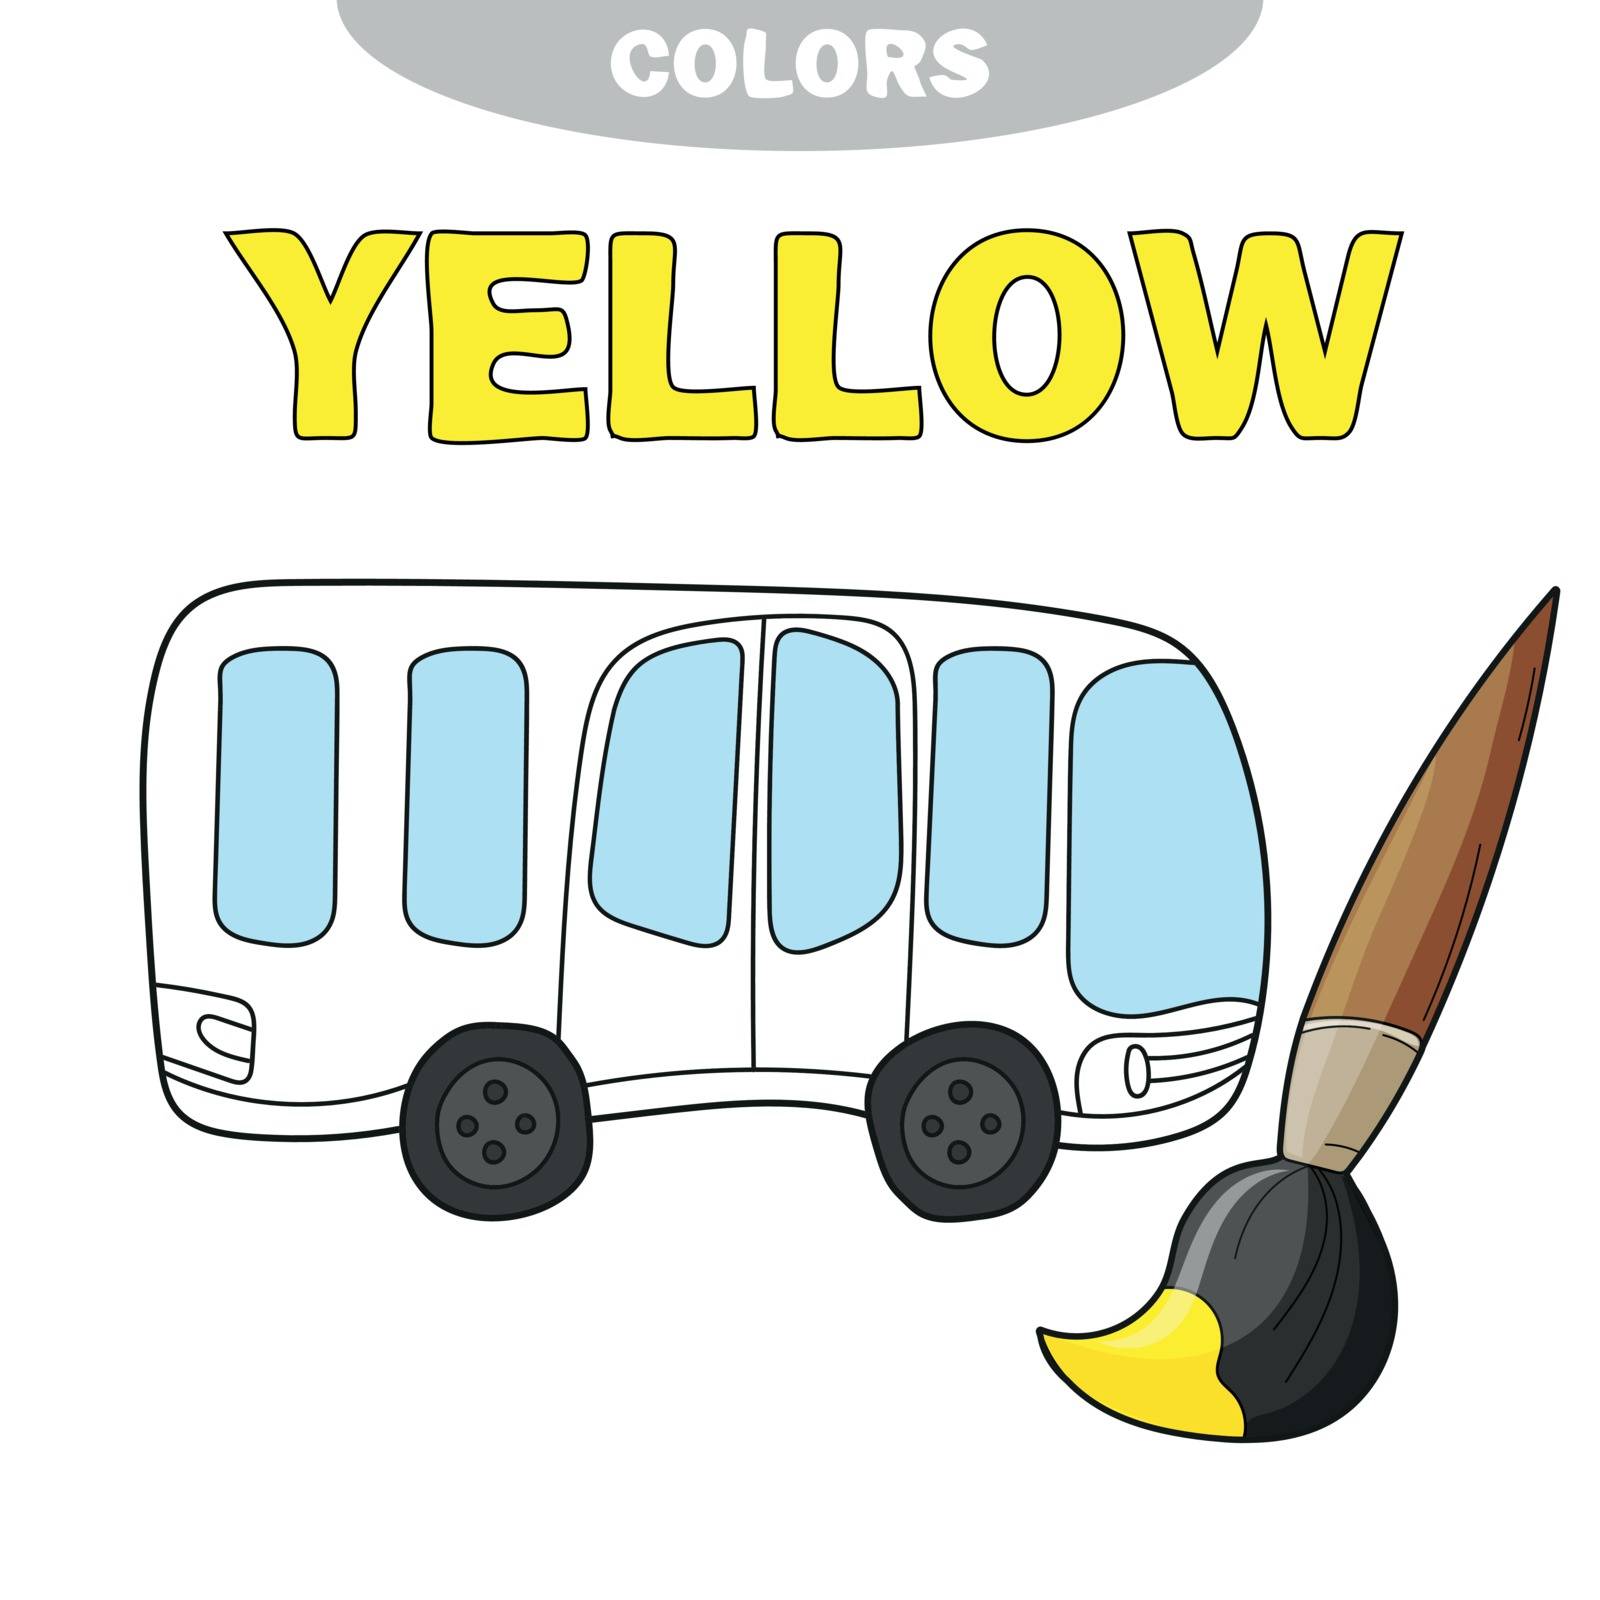 School bus coloring page, back to school concept, kids school vector by natali_brill